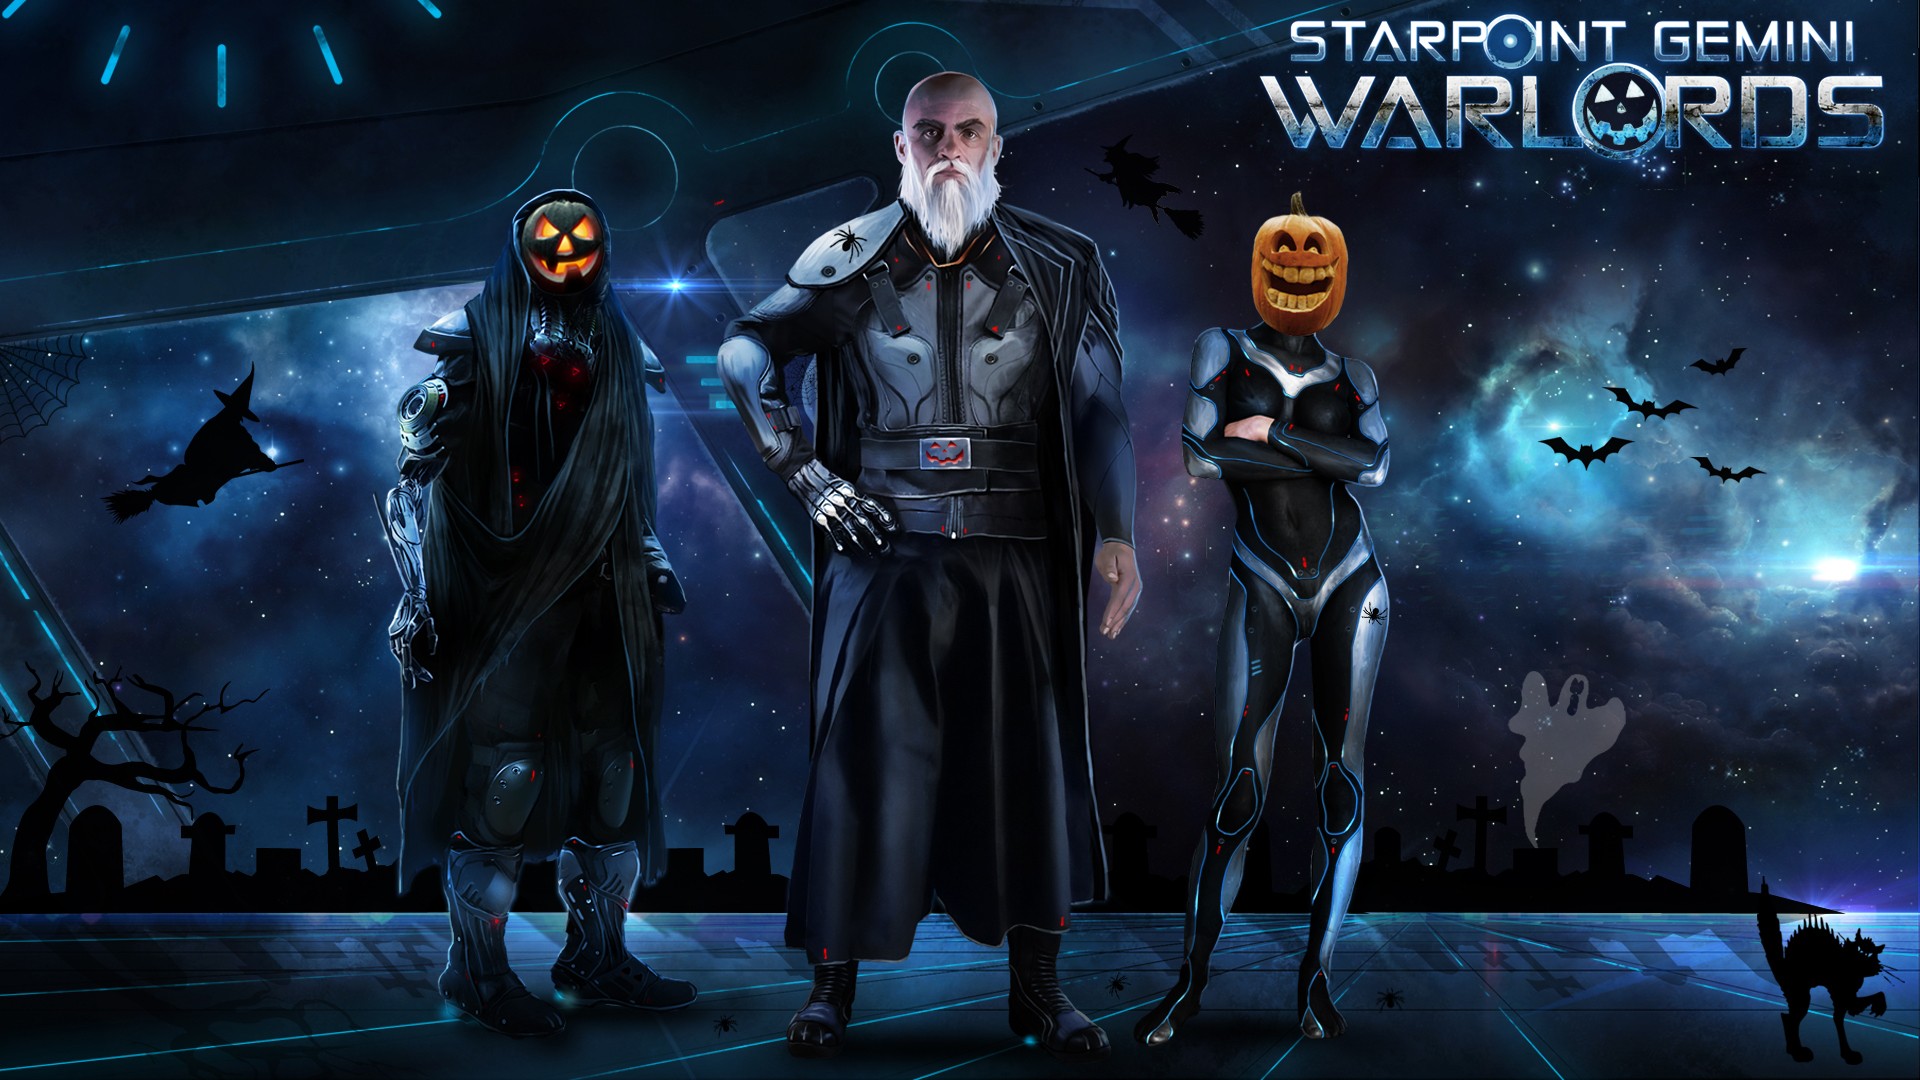 Starpoint Gemini Warlords, Halloween, PC gaming, Video games, Science fiction, Digital art Wallpaper